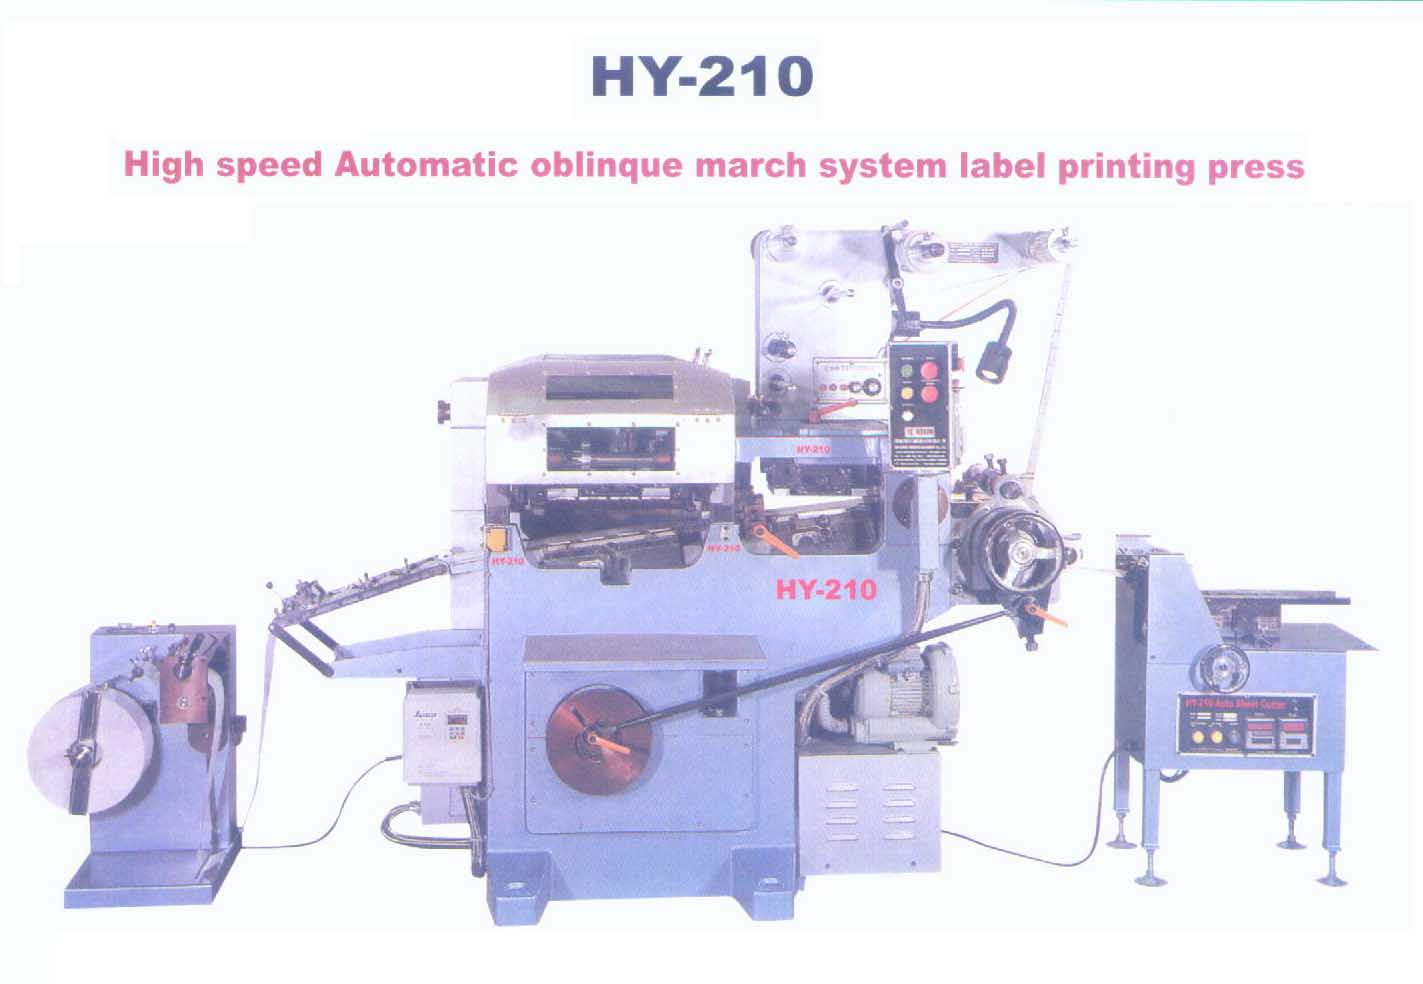 Label Printing Machine